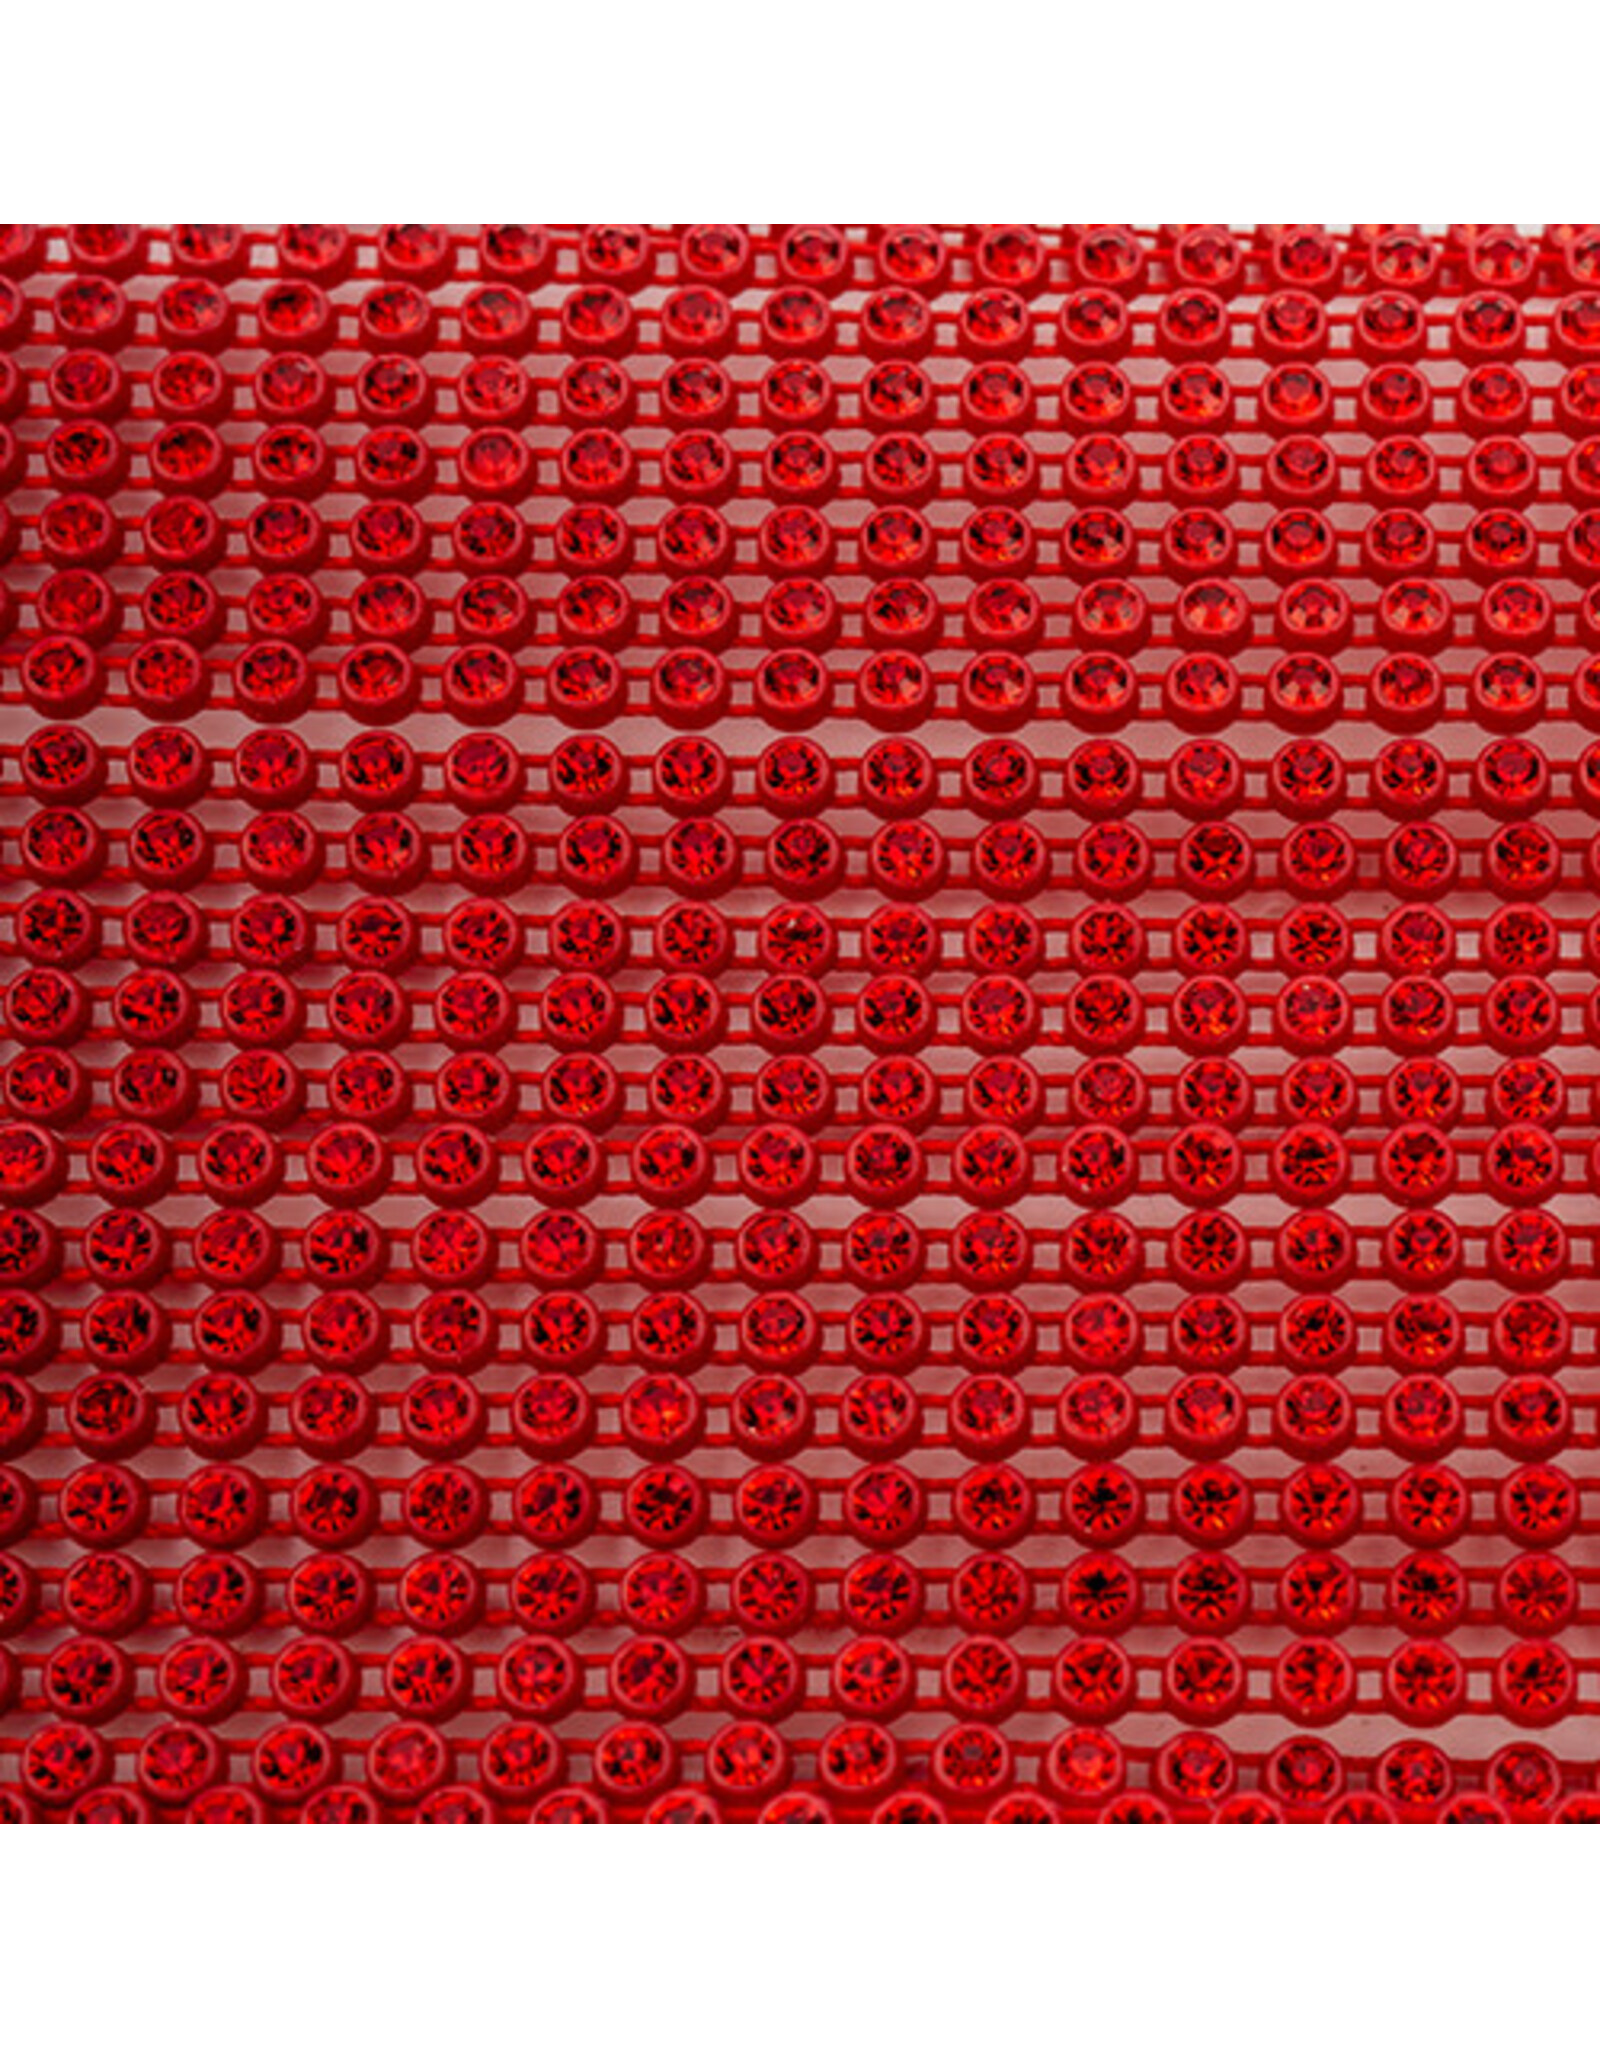 Rhinestone Banding 1 row 2.4mm (ss8) Light Red  Red  x1 foot